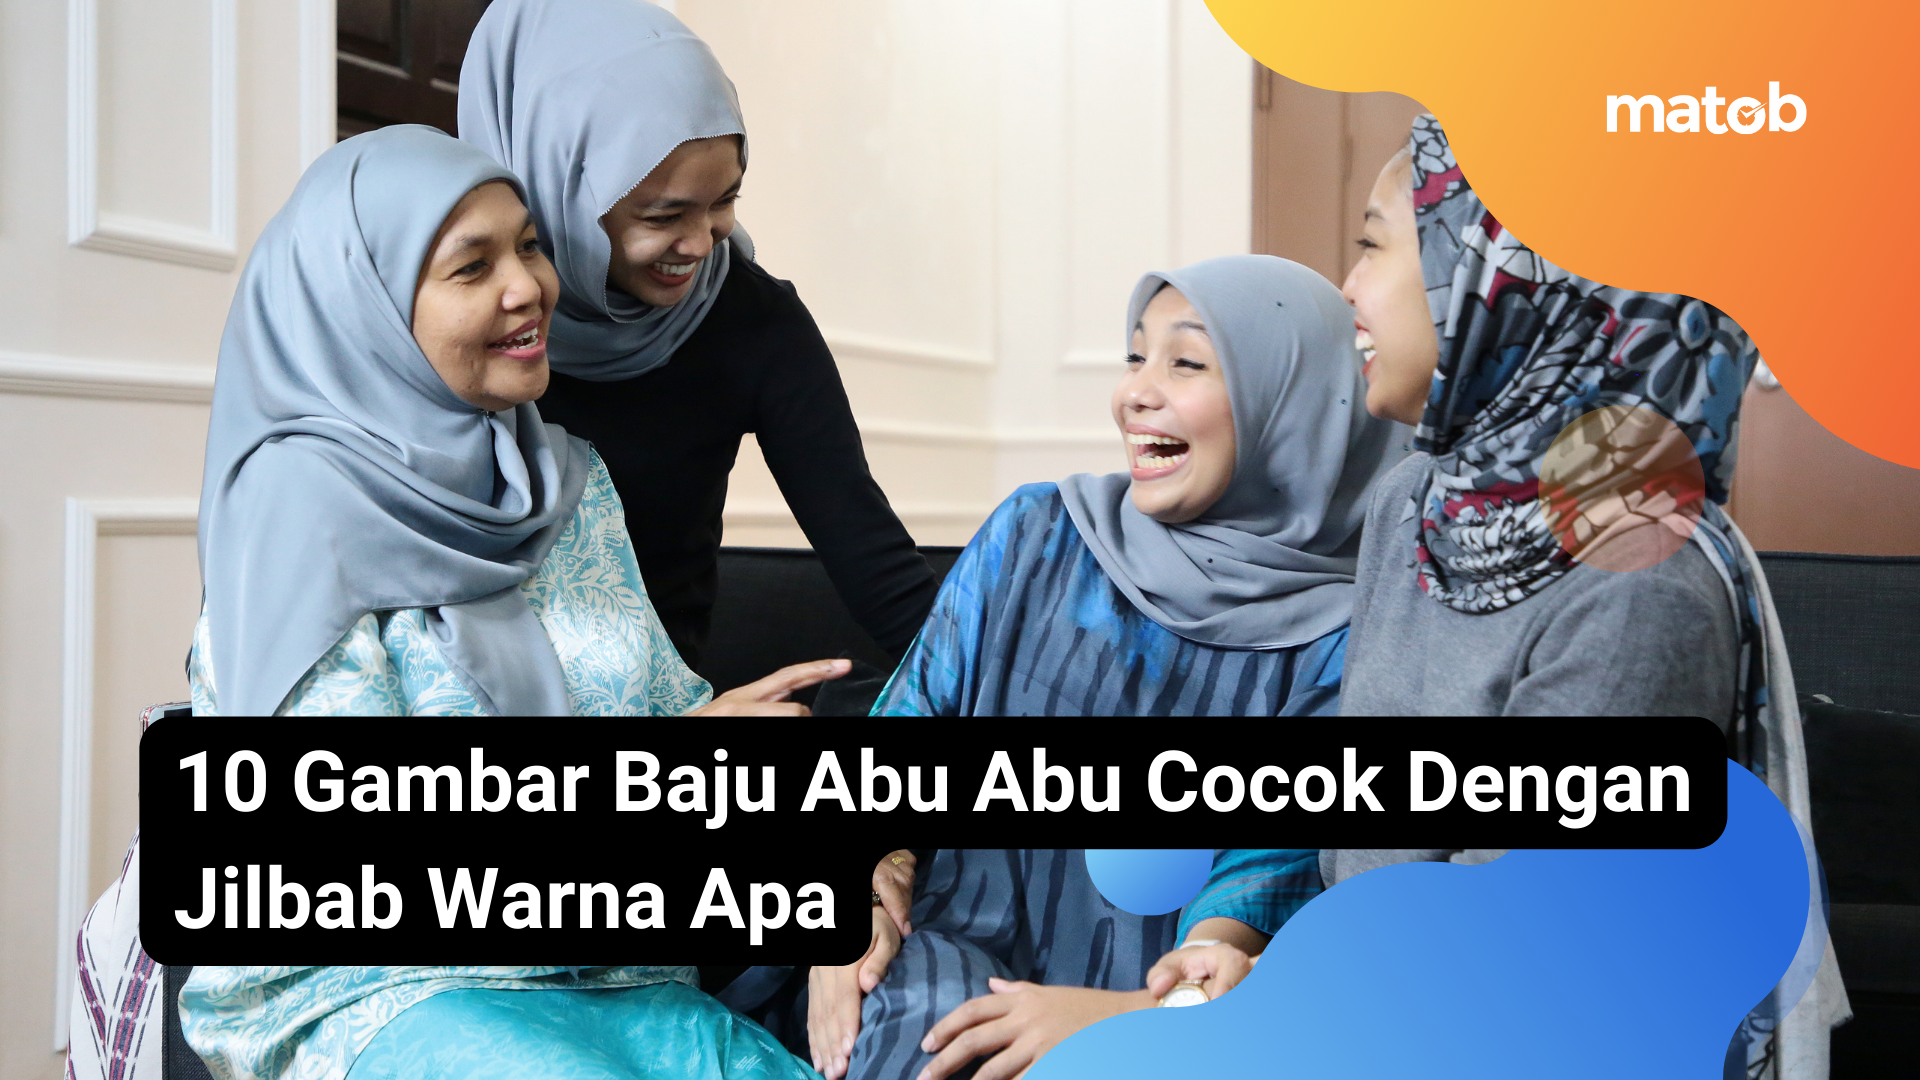 13 Matob Bisnis 10 Gambar Baju Abu Abu Cocok Dengan Jilbab Warna Apa